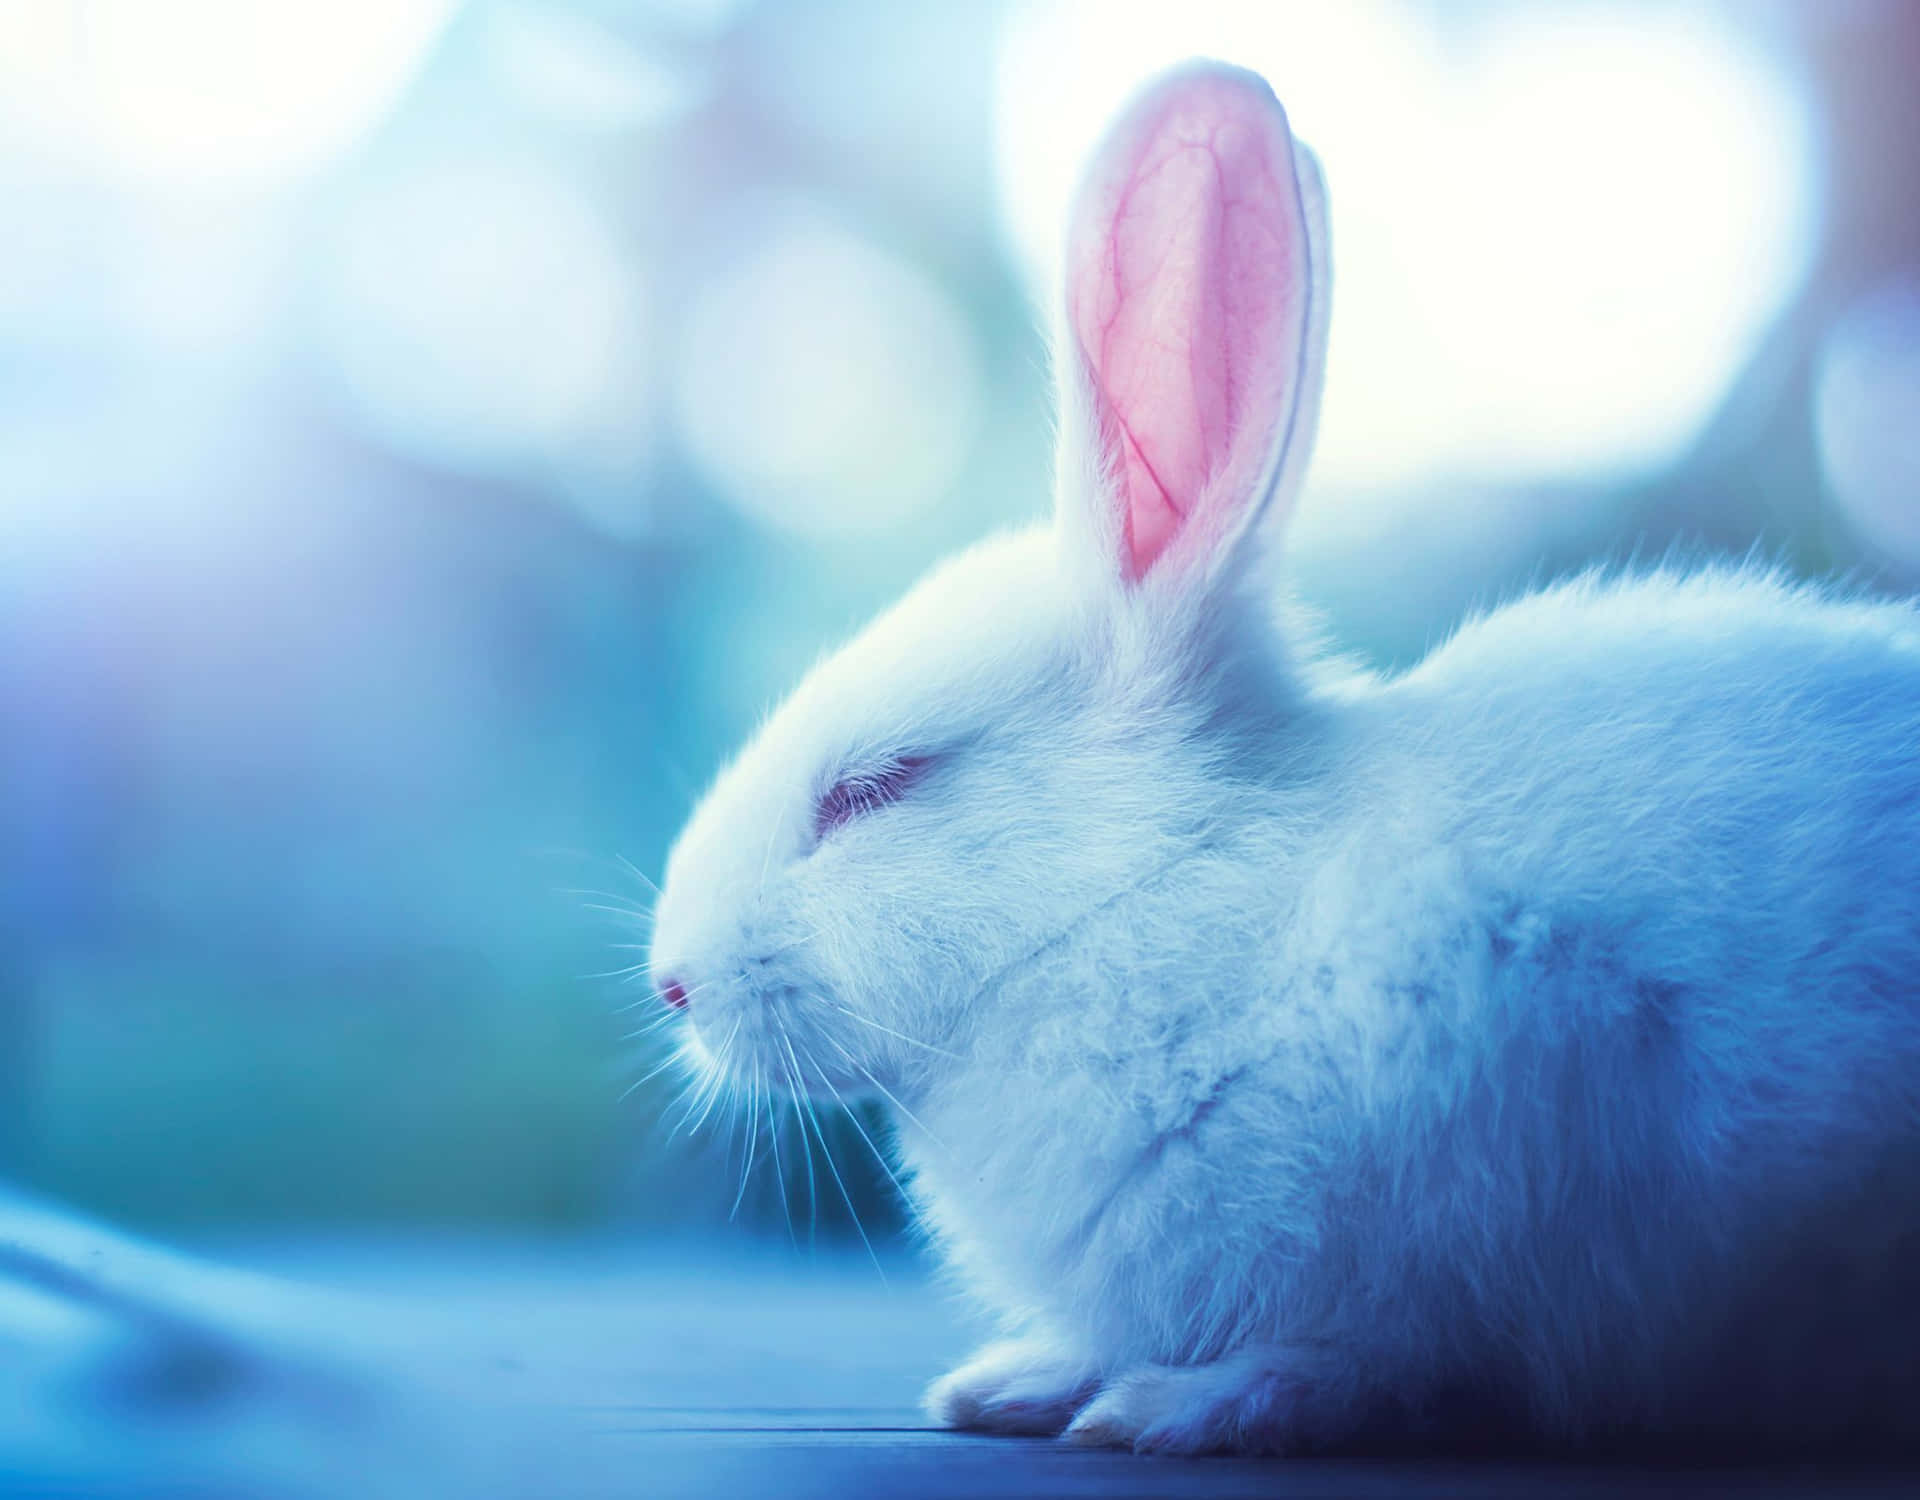 Free Cute Bunny Rabbits Wallpaper Downloads, [100+] Cute Bunny Rabbits  Wallpapers for FREE 